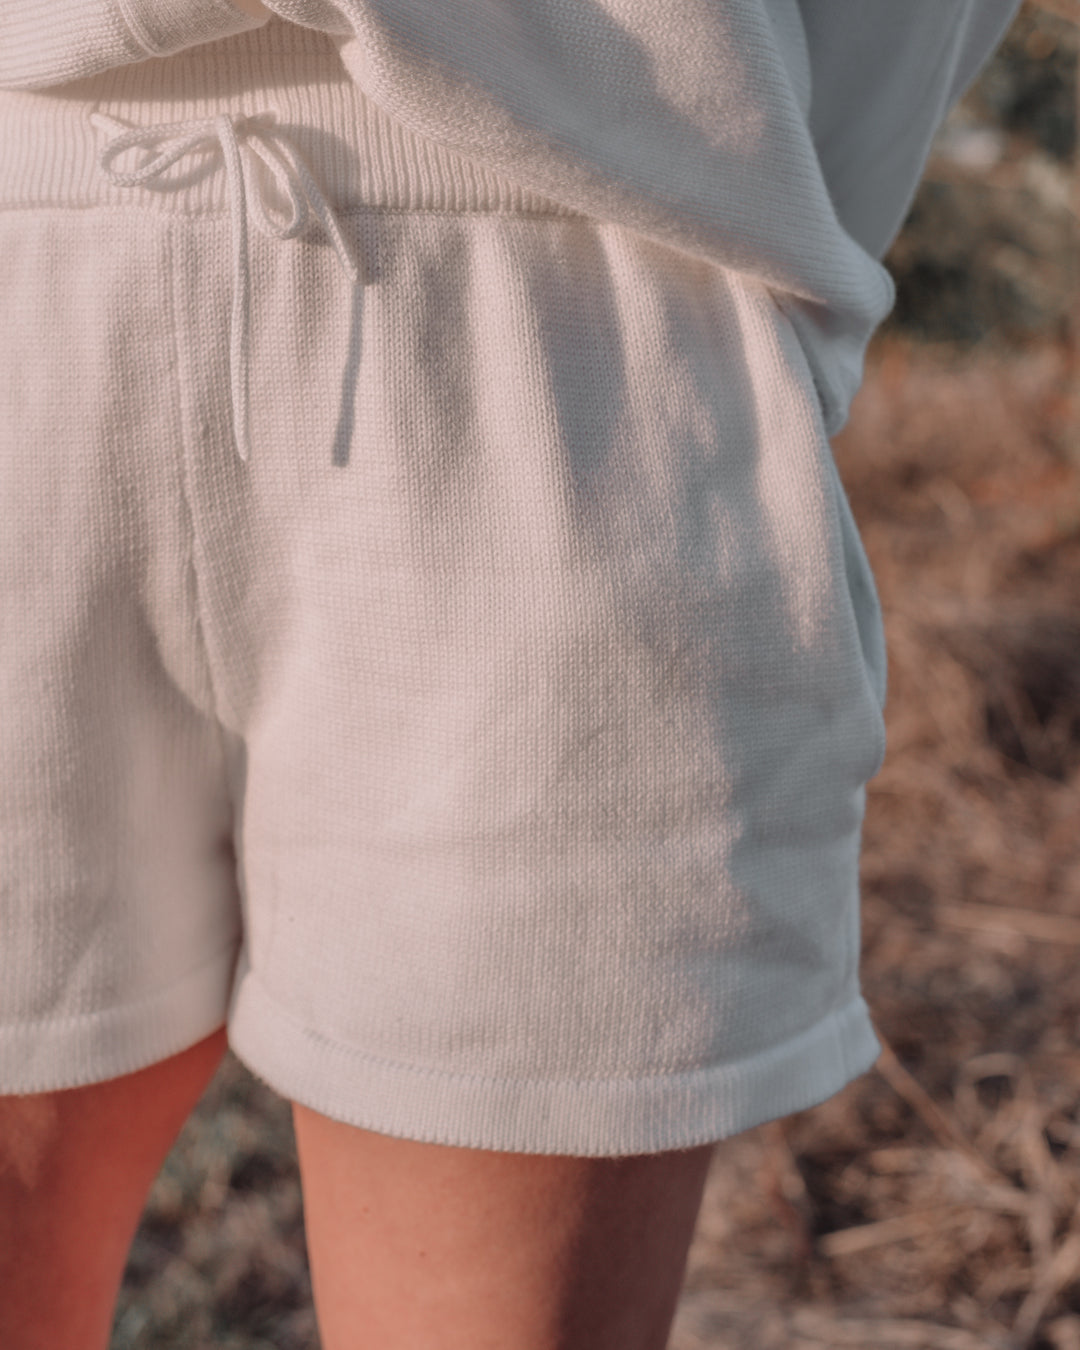 Ivie Shorts - Womens White Knit Shorts